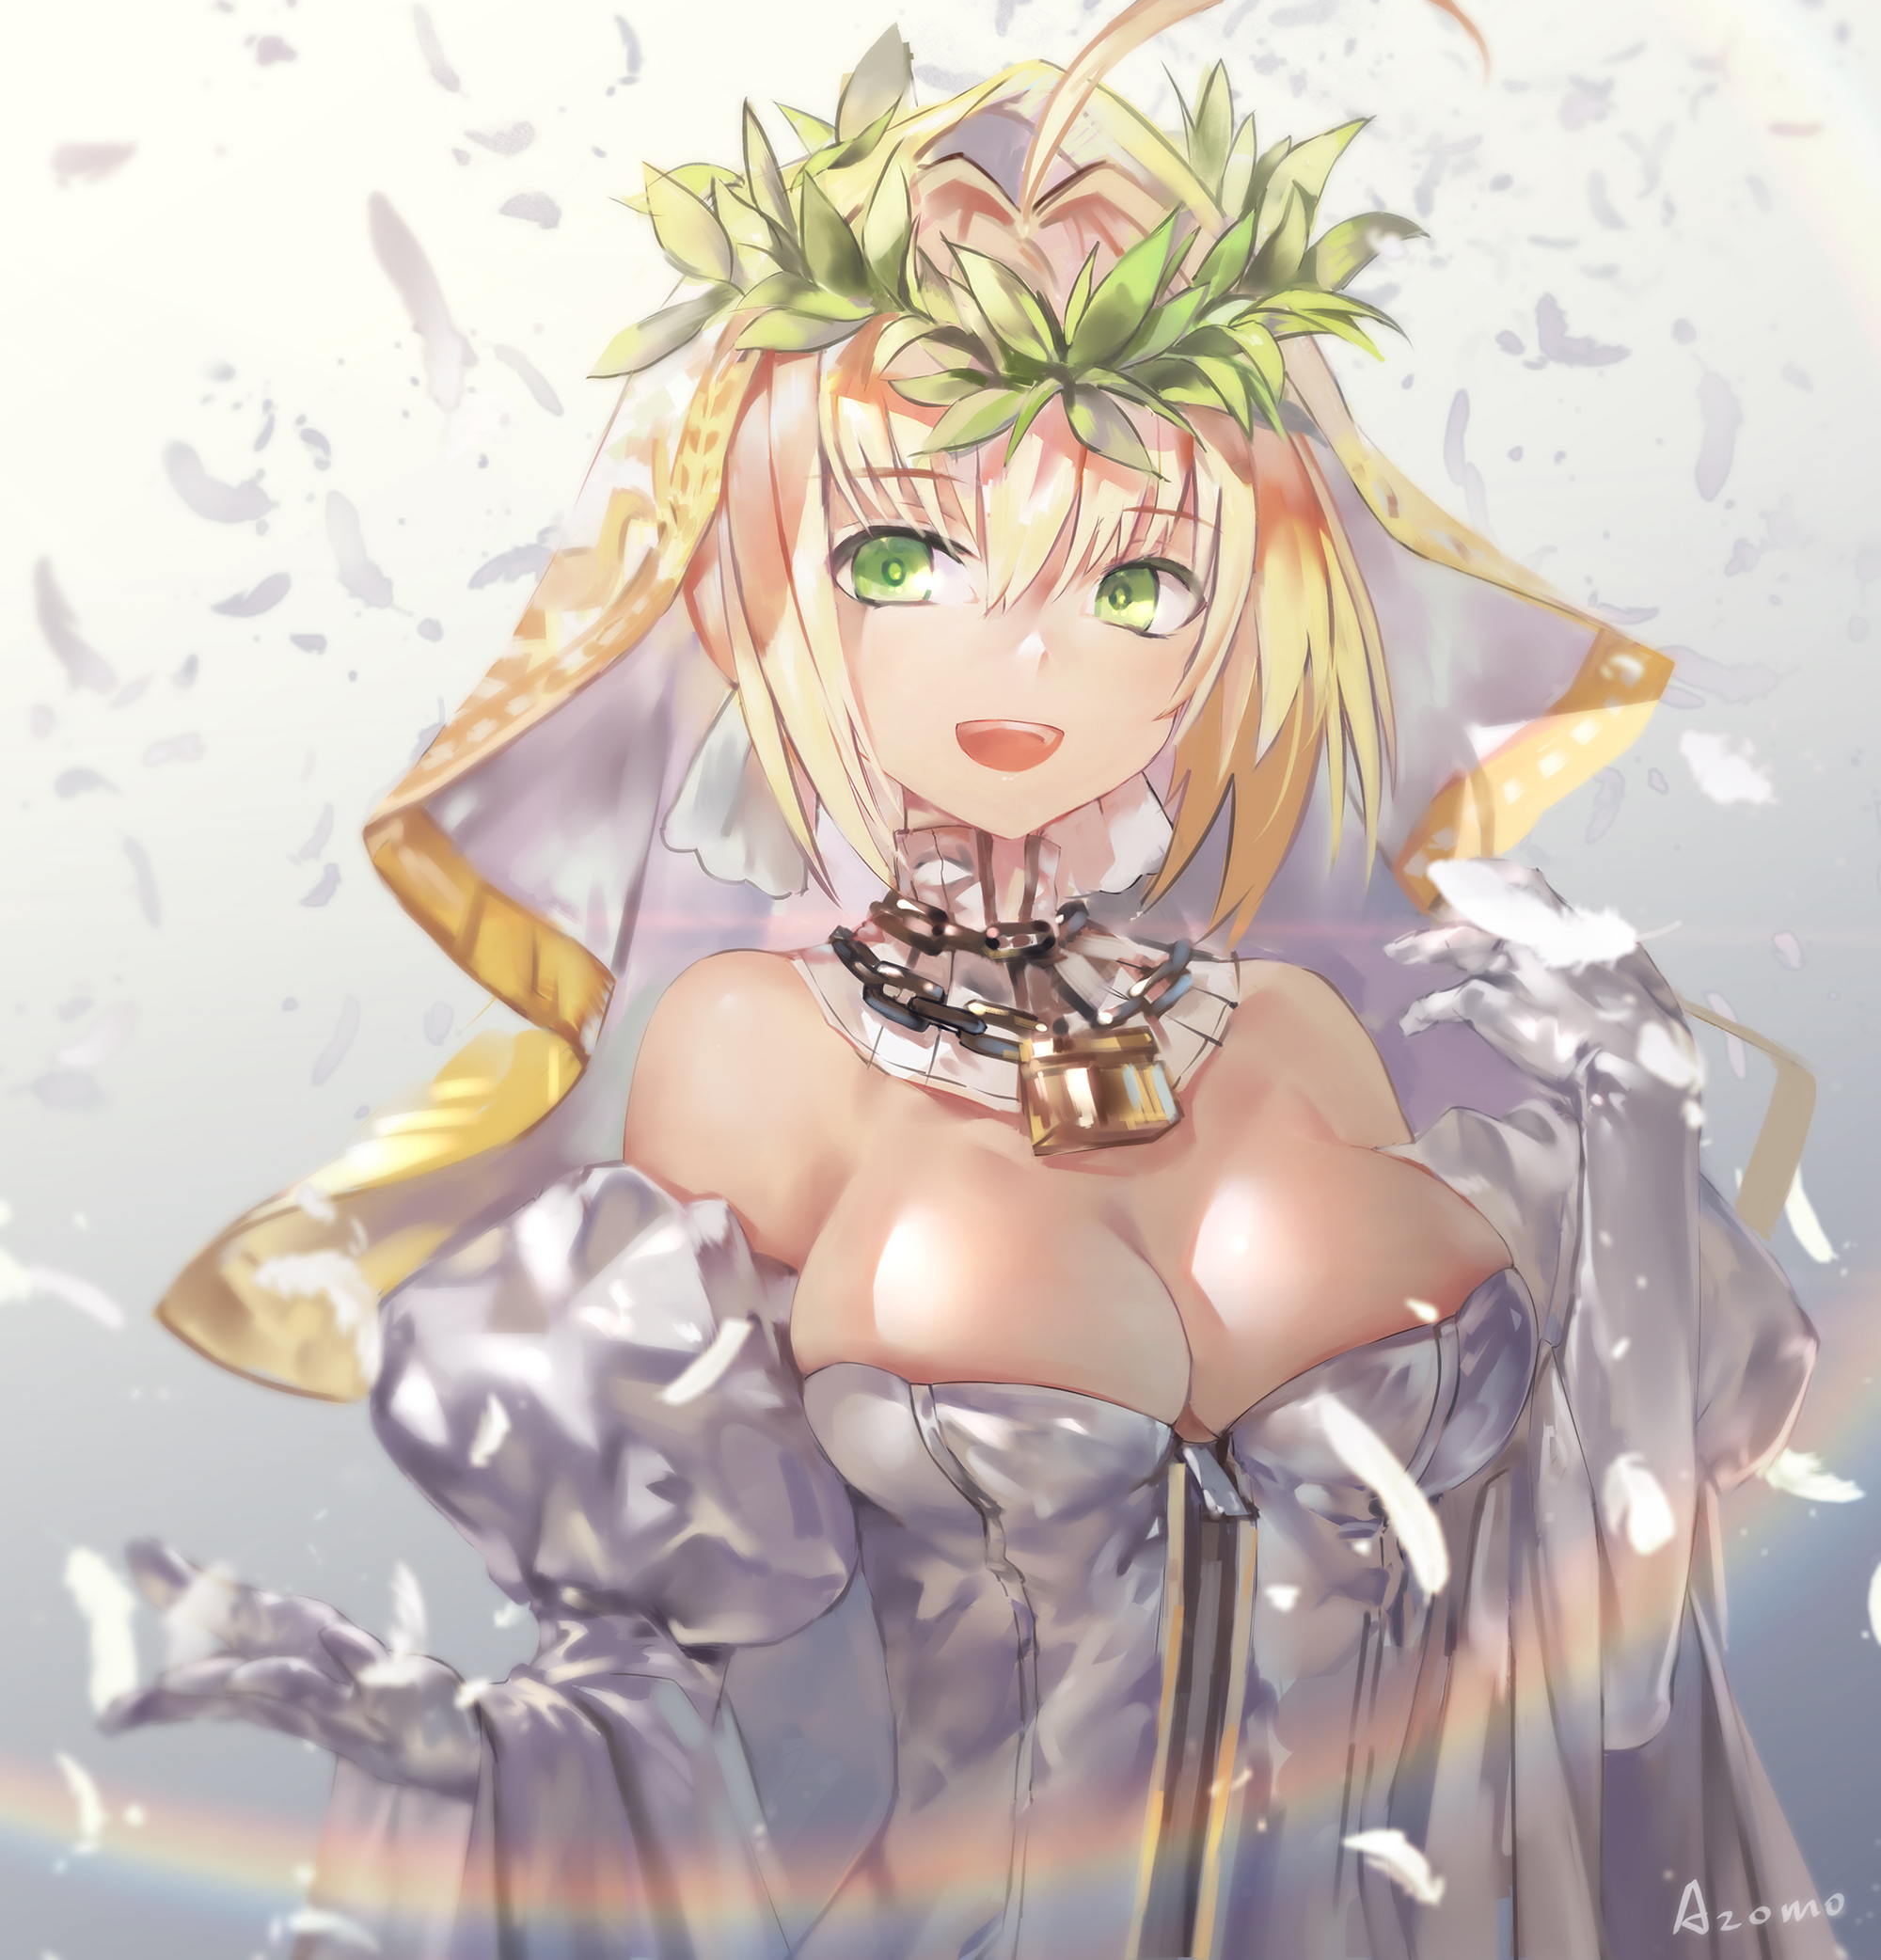 Anime 2000x2084 boobs white background bodysuit cleavage Fate/Grand Order Saber Bride blonde green eyes Azomo anime girls low neckline Nero Claudius Fate series